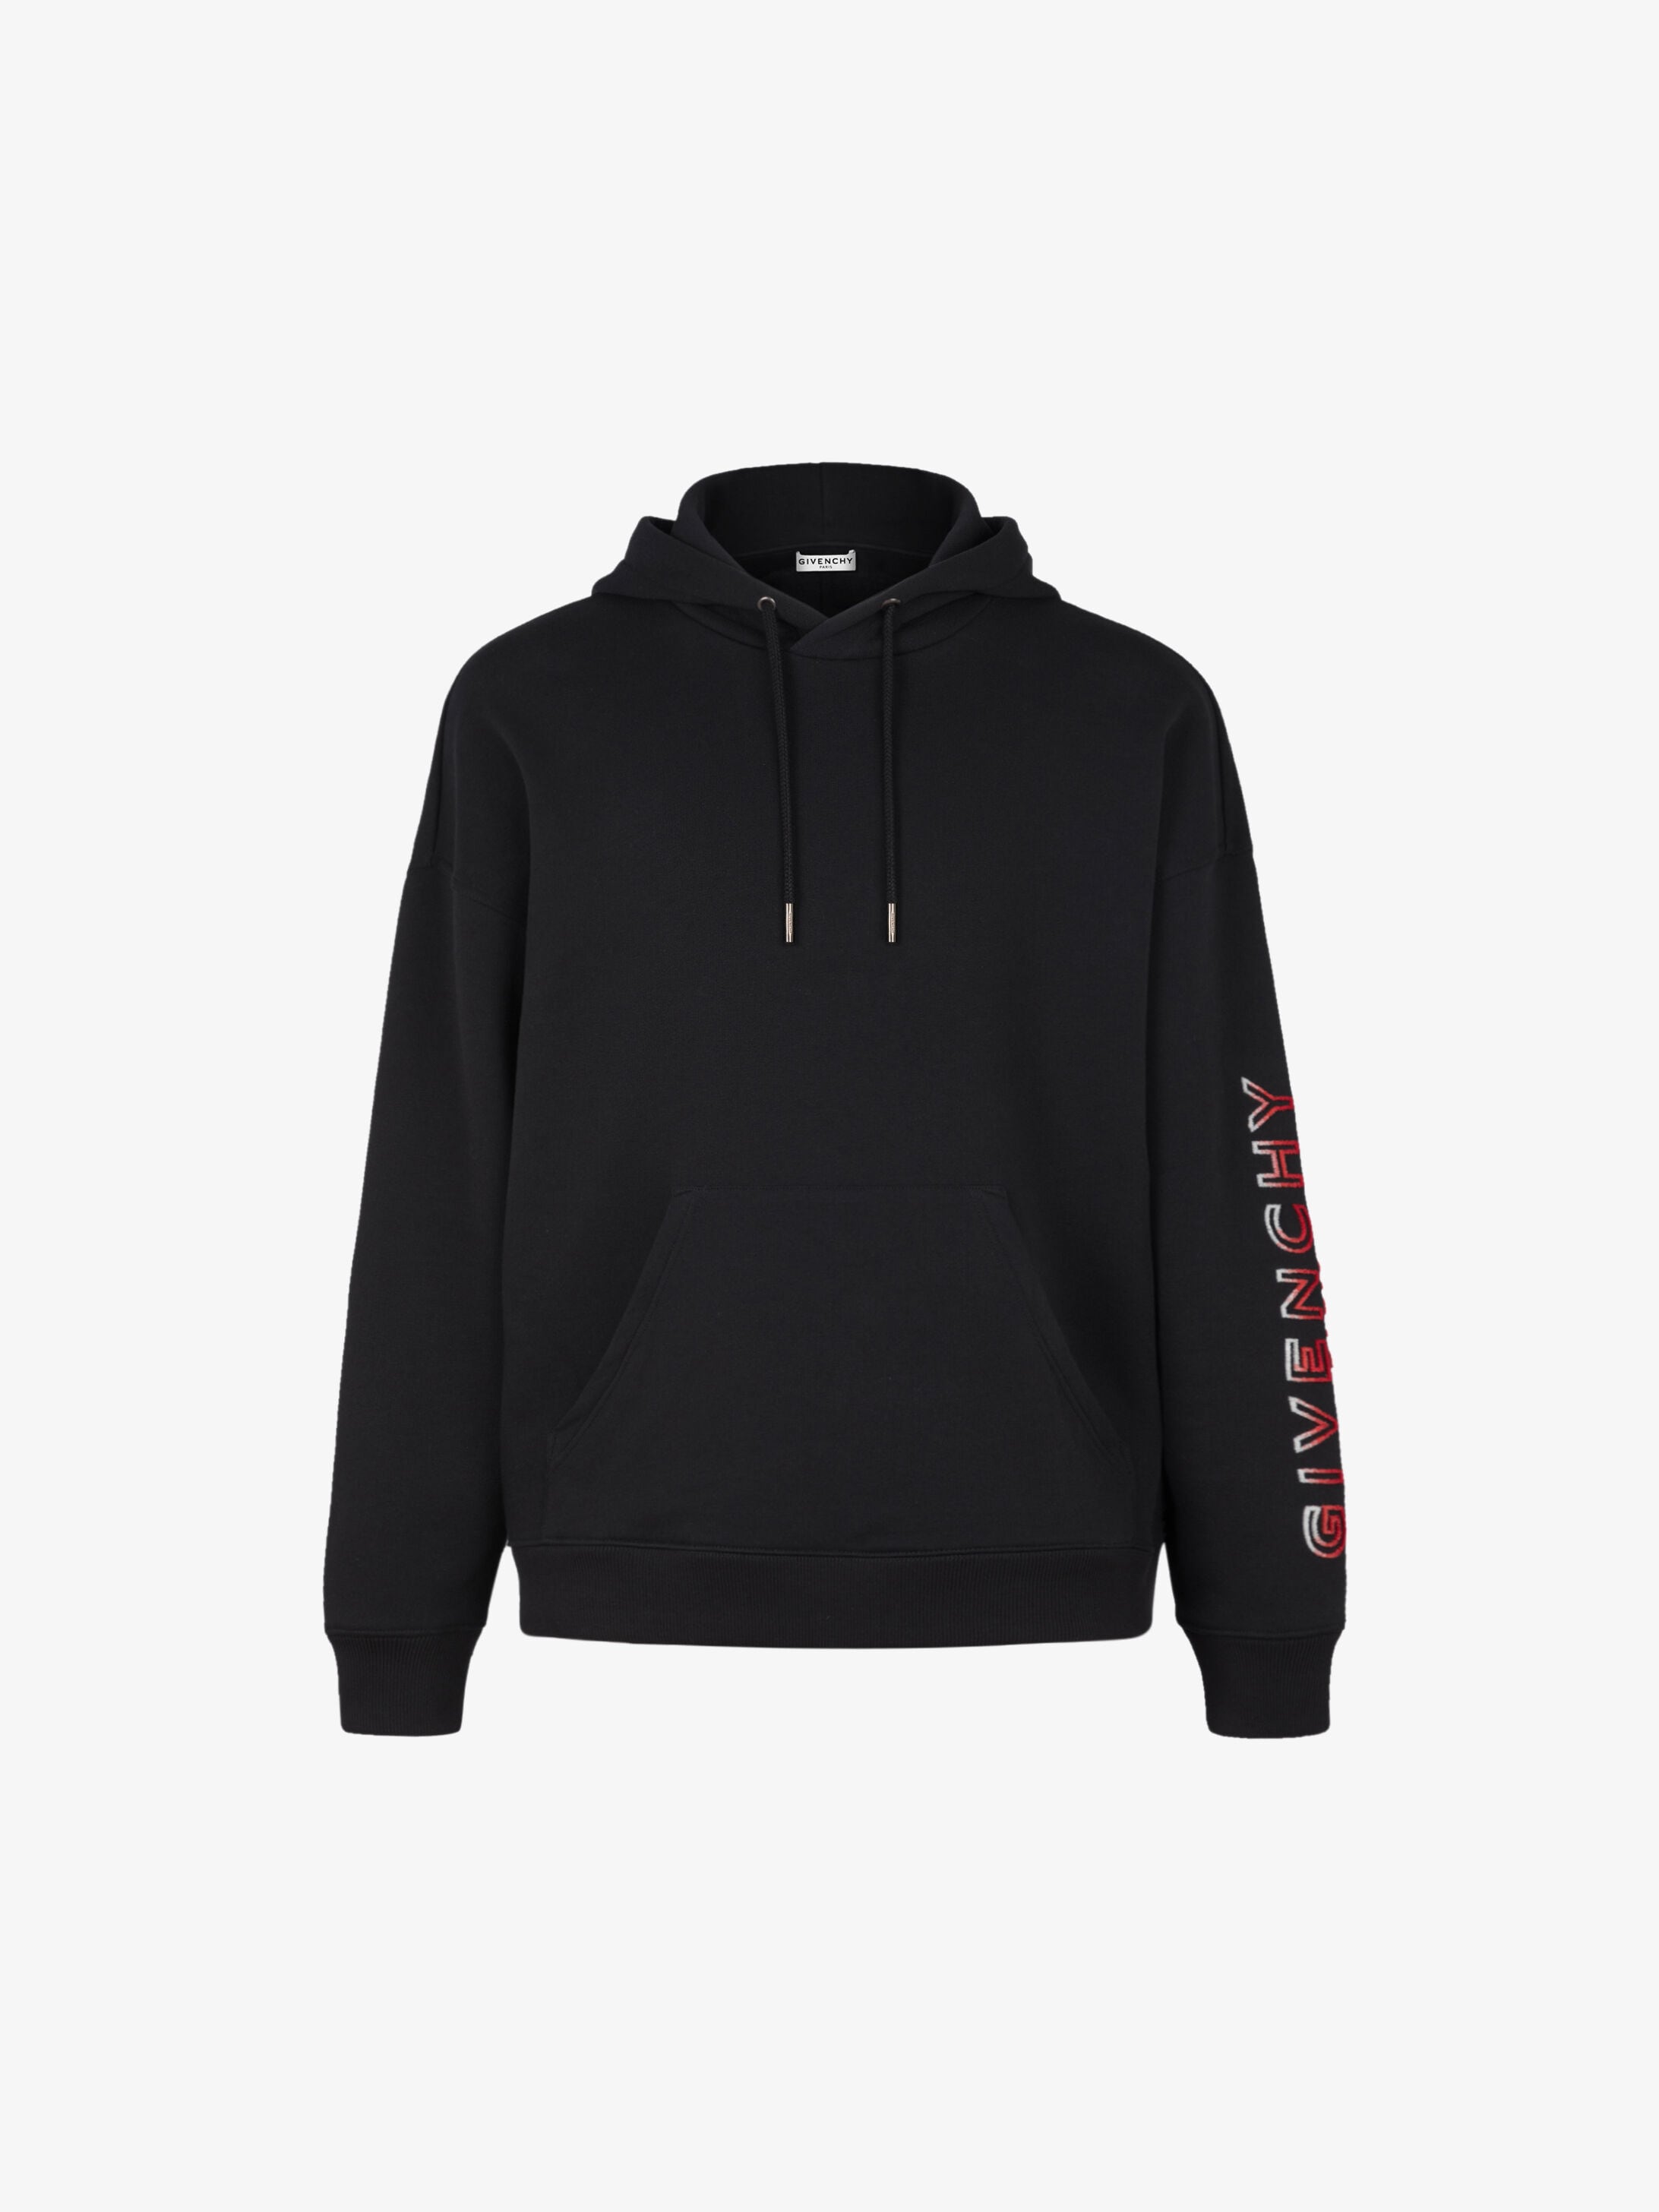 average price of hoodies